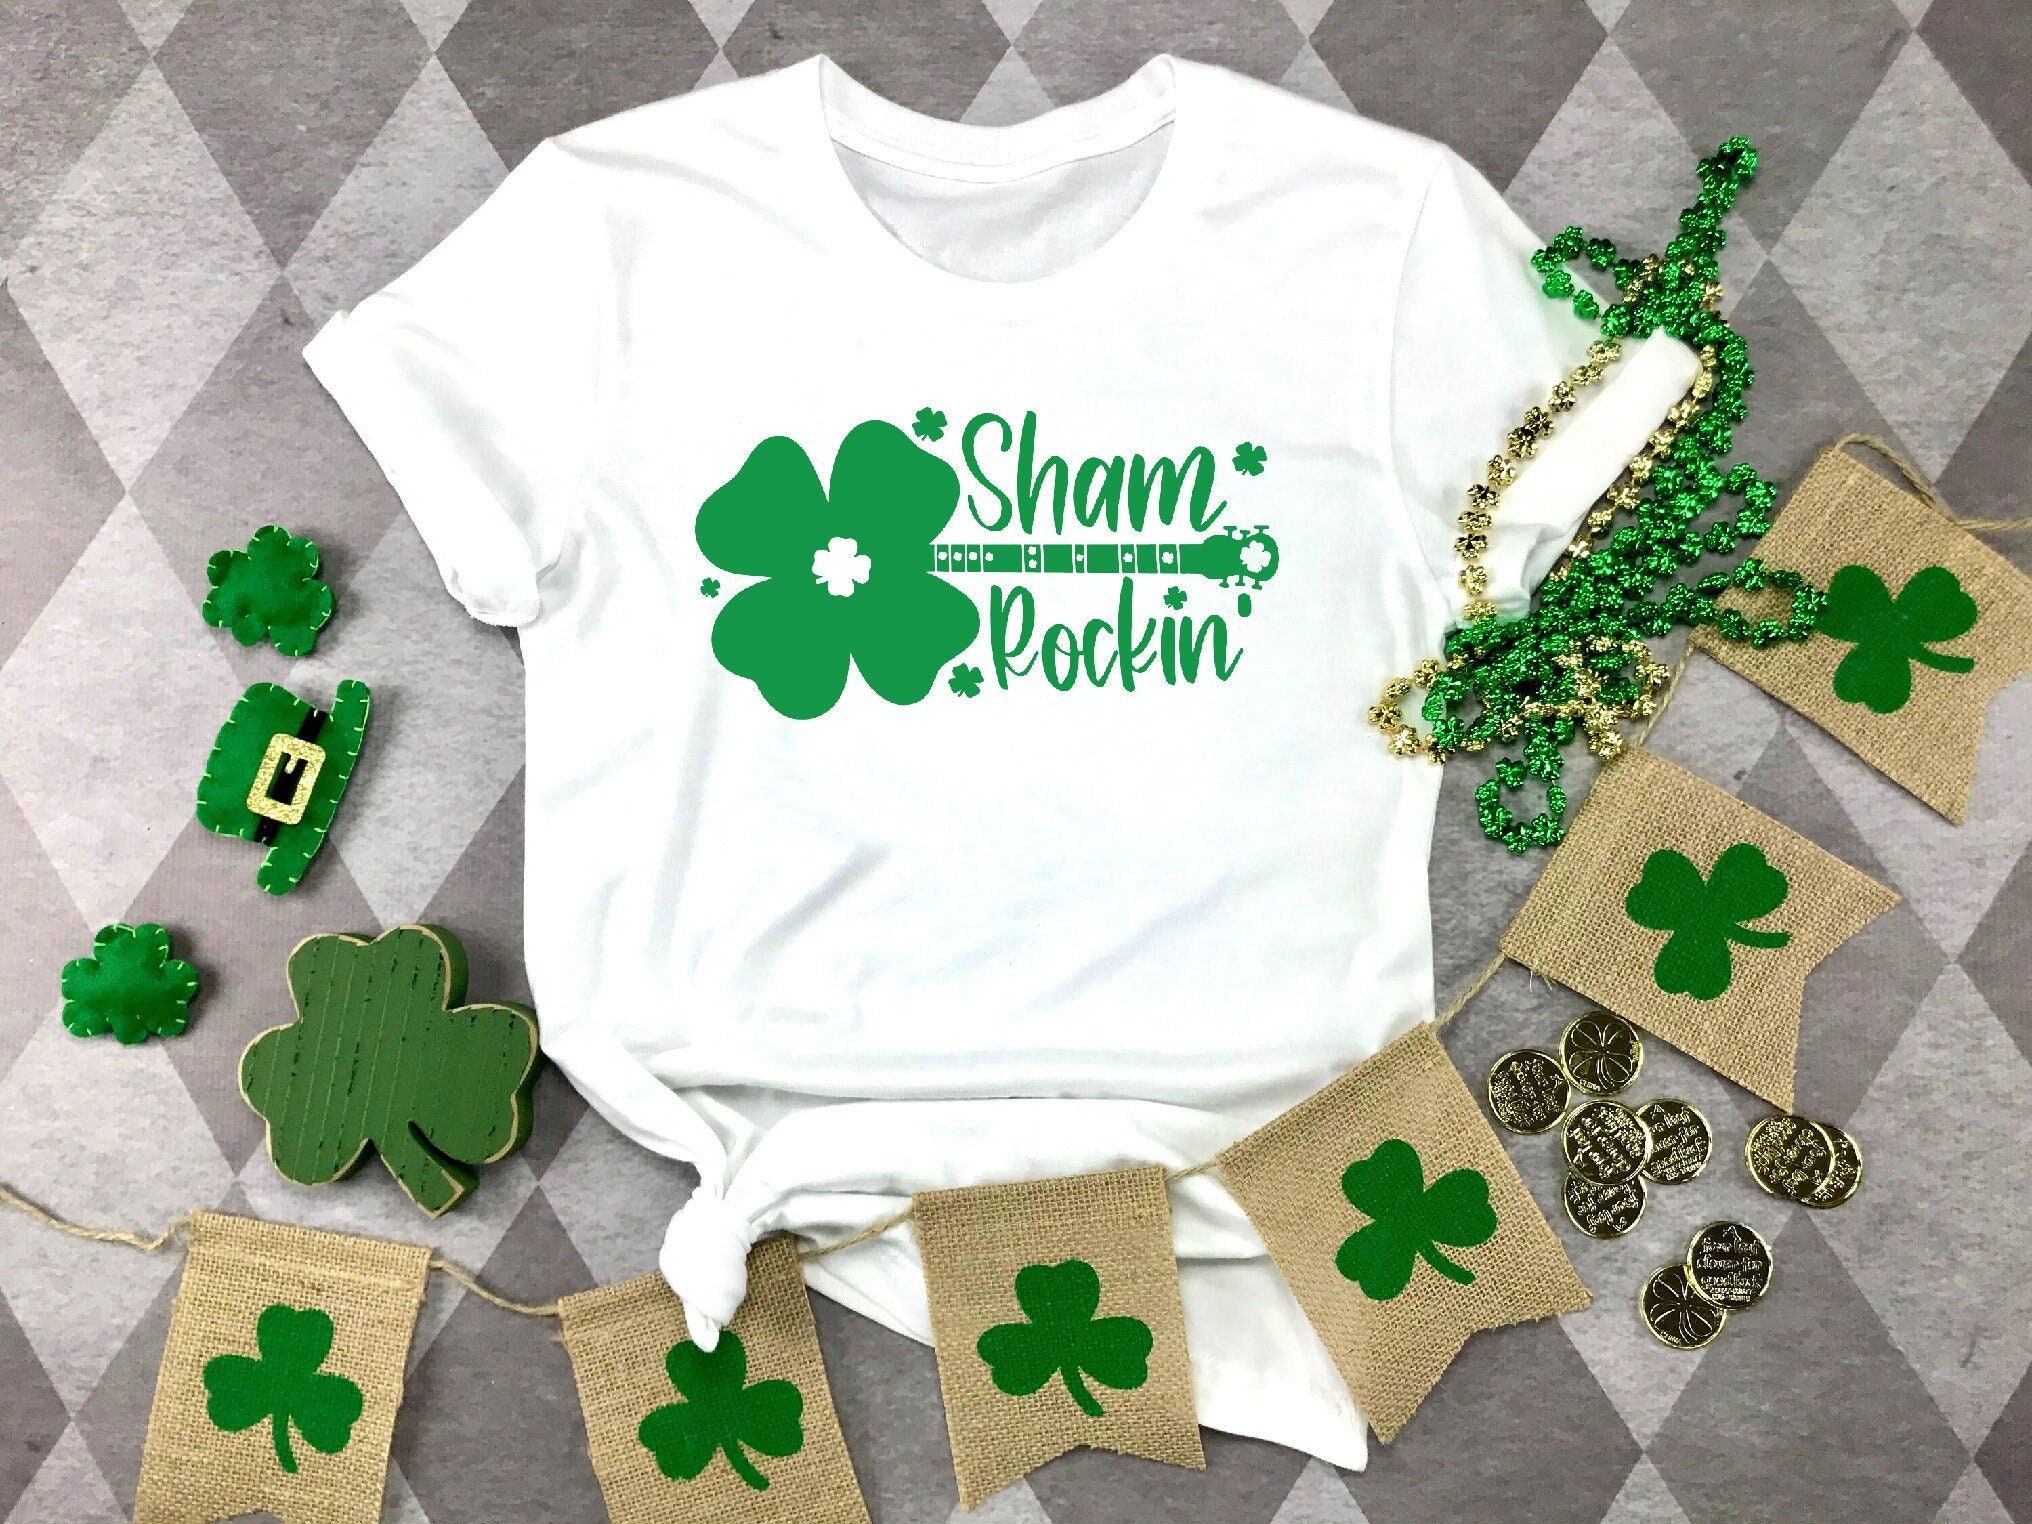 Discover Four Leaf Clover Gift,Guitarist Shirt,Lucky Guitar Player Gift Shirt,St. Patrick's Day Shirt